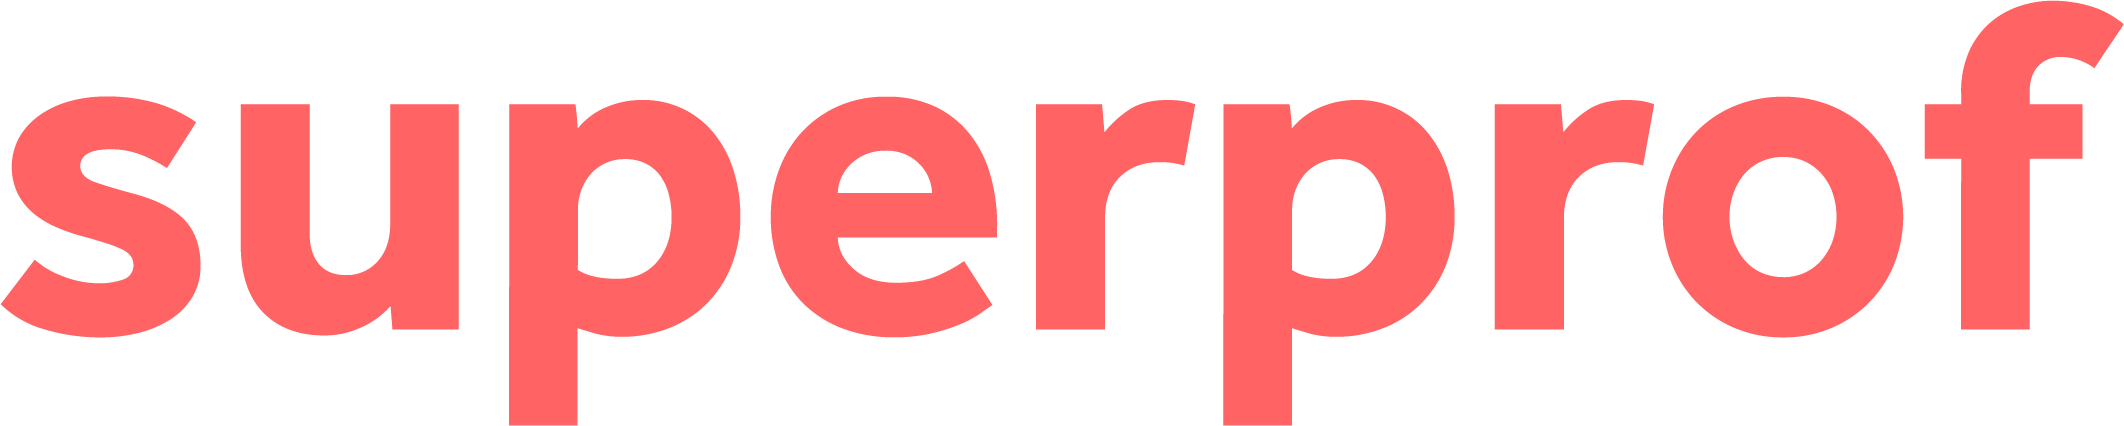 logotype-transparent-pink.png